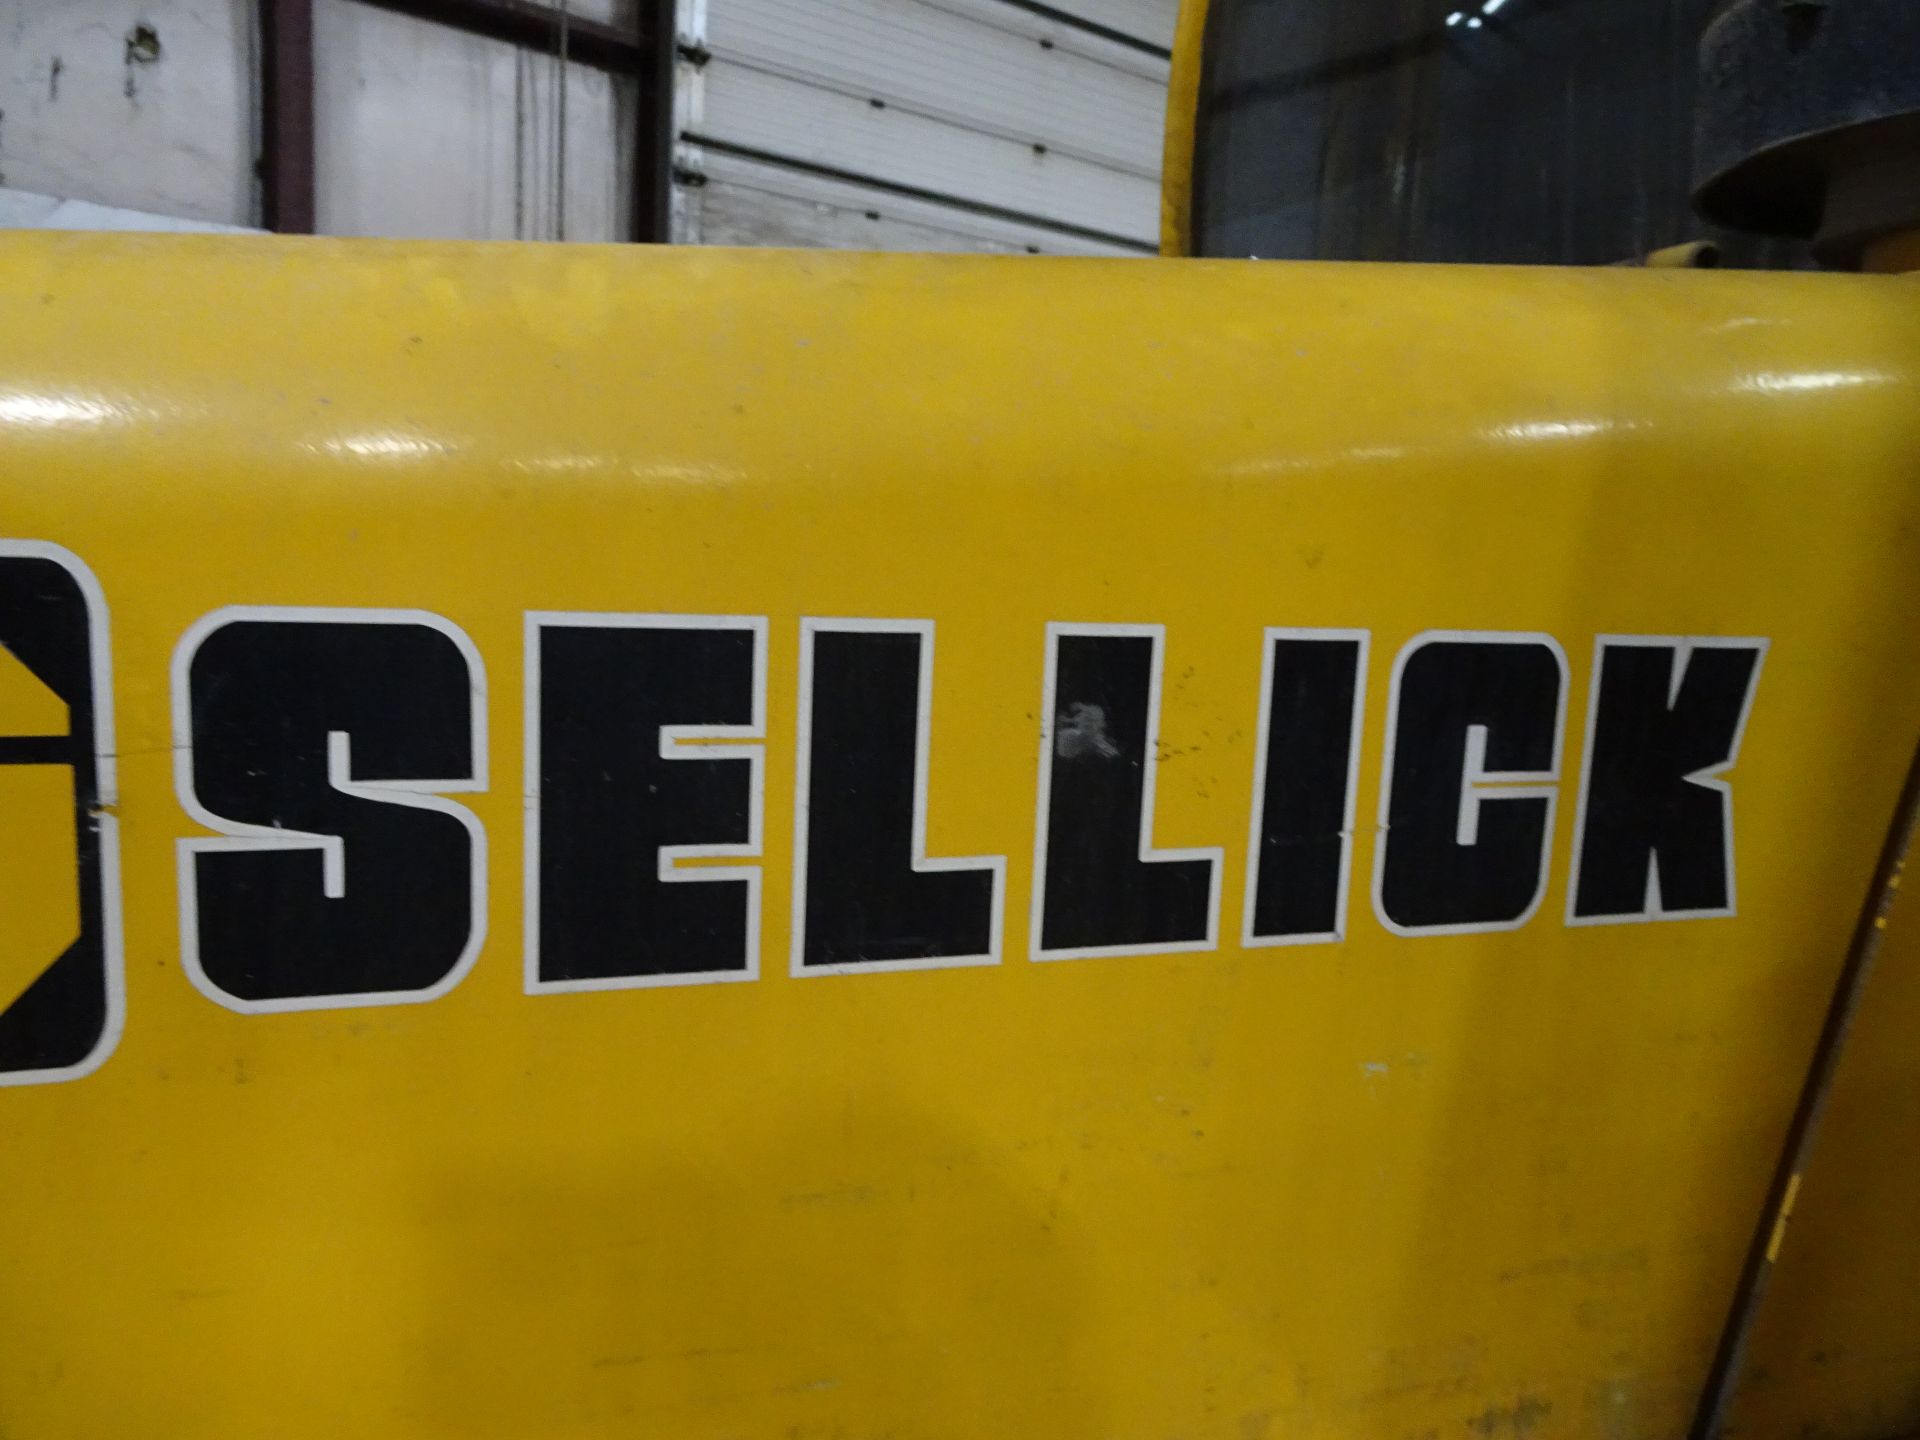 Sellick Model S120 12,000 lb Capacity Diesel Forklift - Image 4 of 4